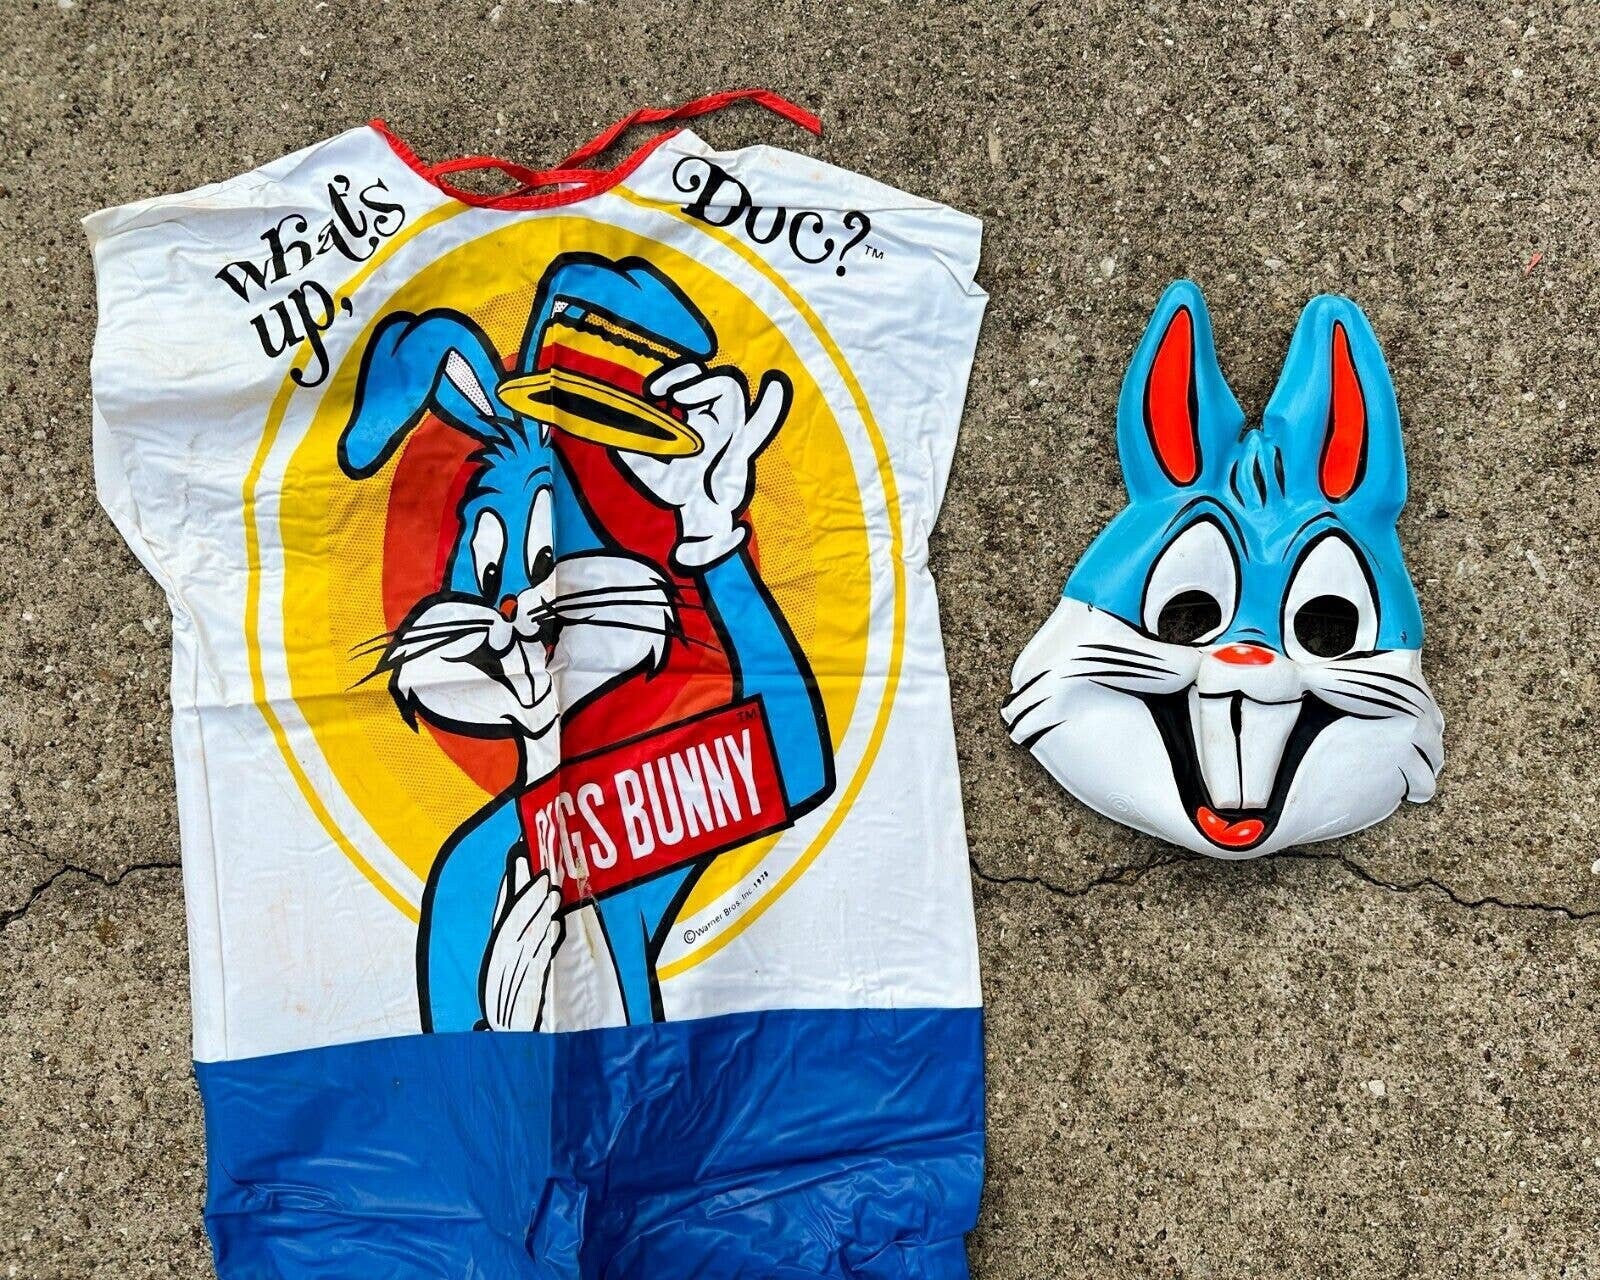 Looney Tunes Bugs Bunny Hooded Child Halloween Costume 